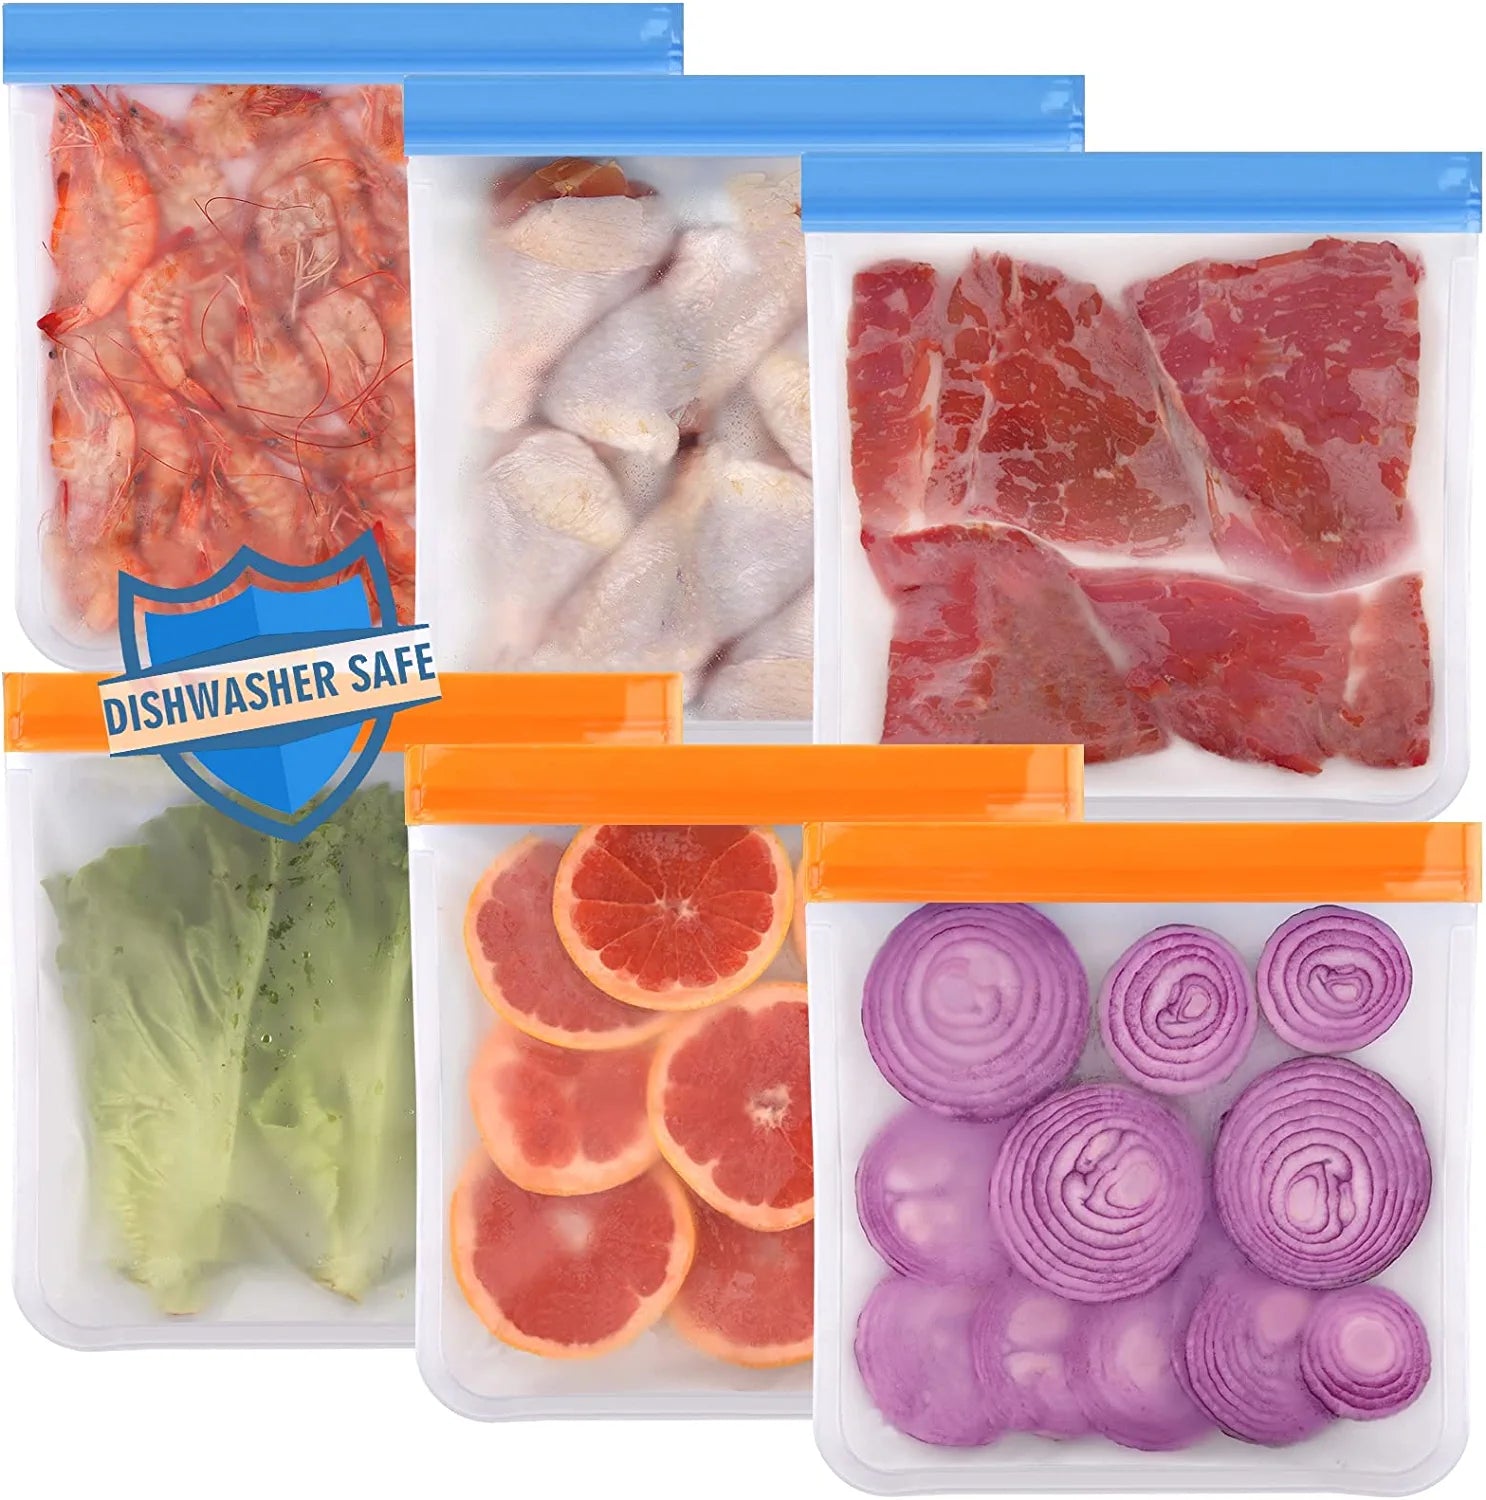 Stand-Up Reusable Gallon Freezer Bags (1 Gallon, Set of 4) - Leakproof  Ziplock Reusable Storage Bags for Sandwich, Snack, Meat, Vegetables, Fruit  etc.